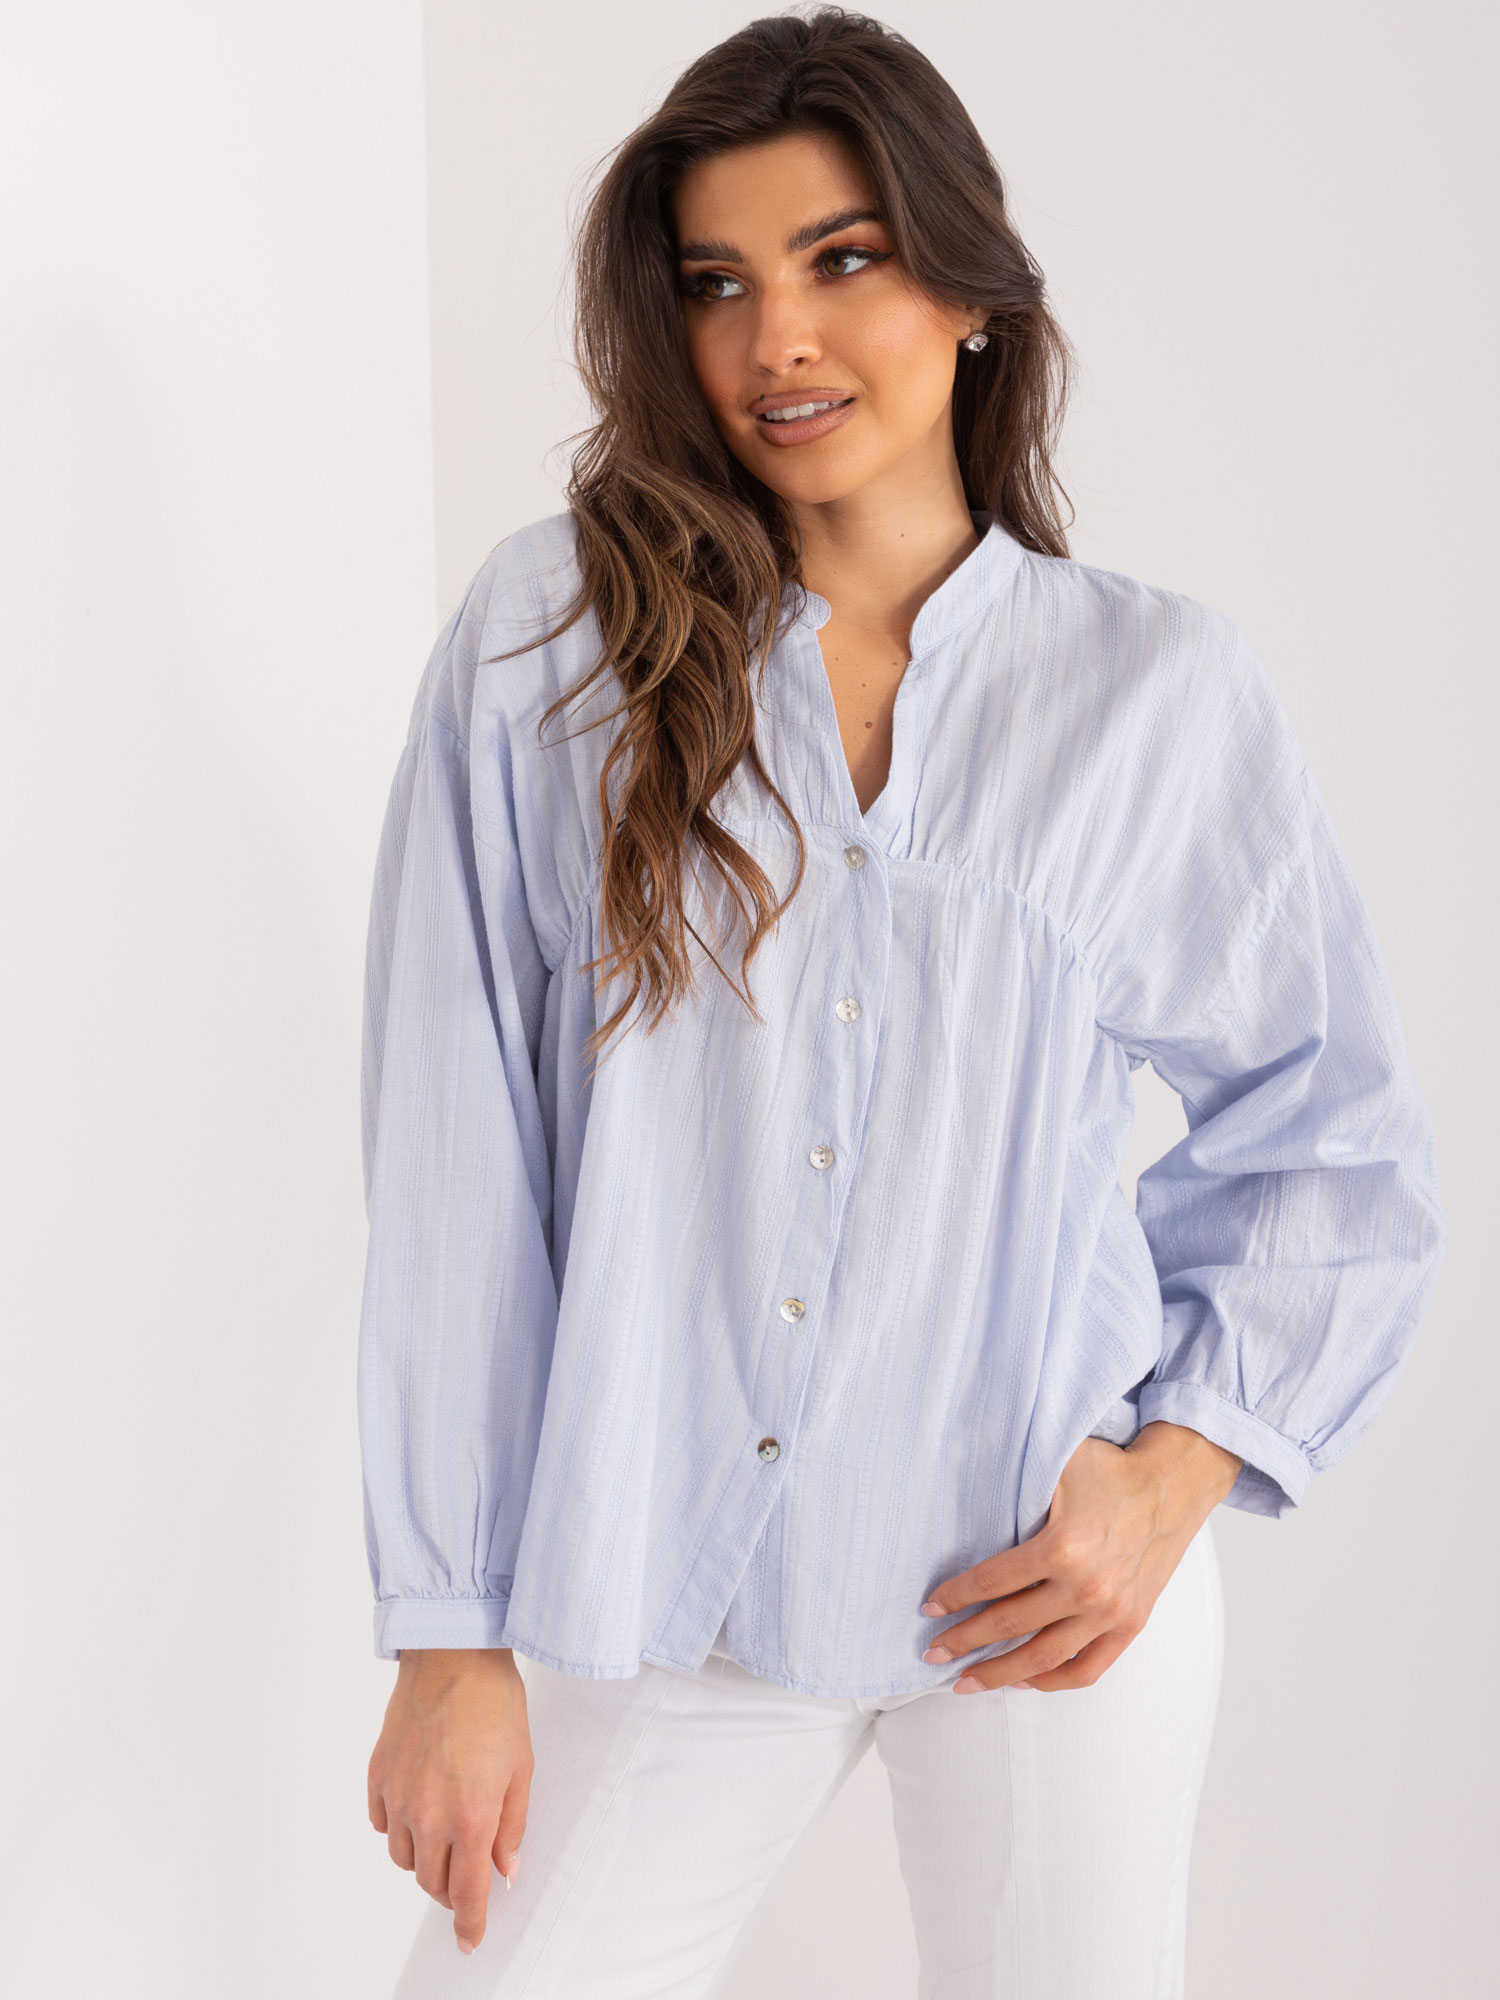 Light blue women's oversize shirt with stand-up collar